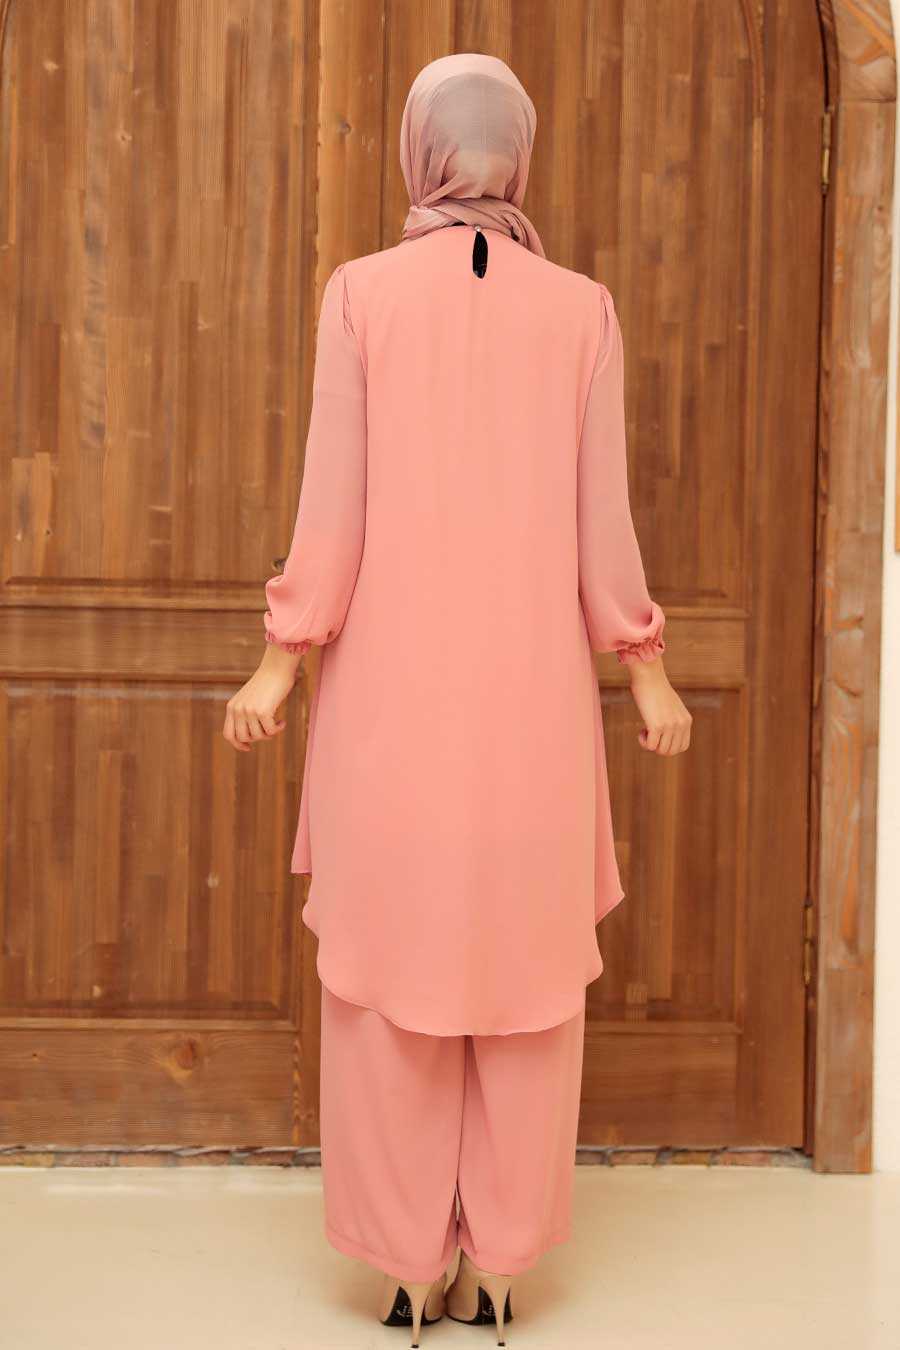 Salmon Pink Hijab Suit Dress 12510SMN